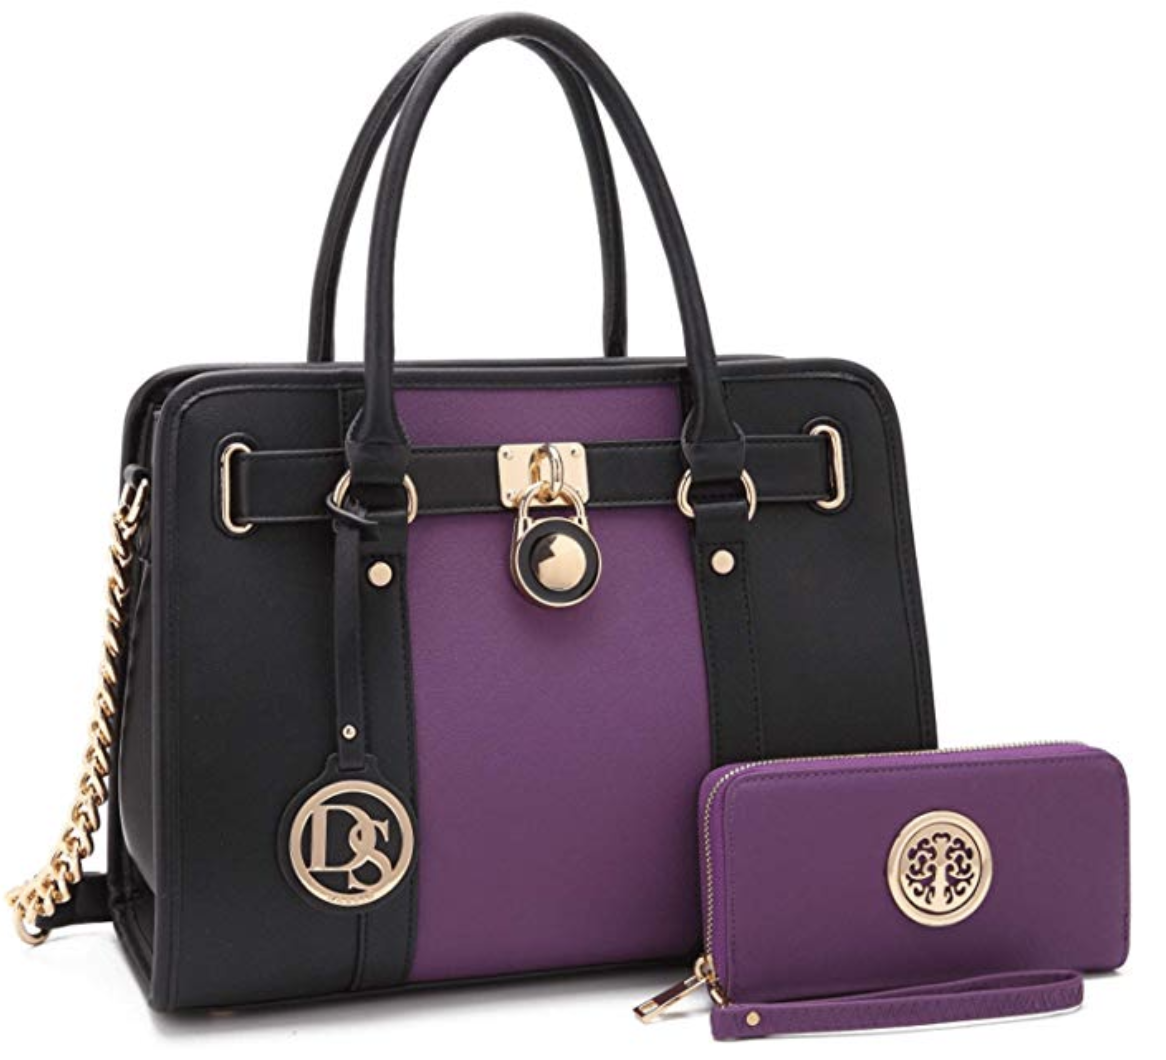 Black and purple purse